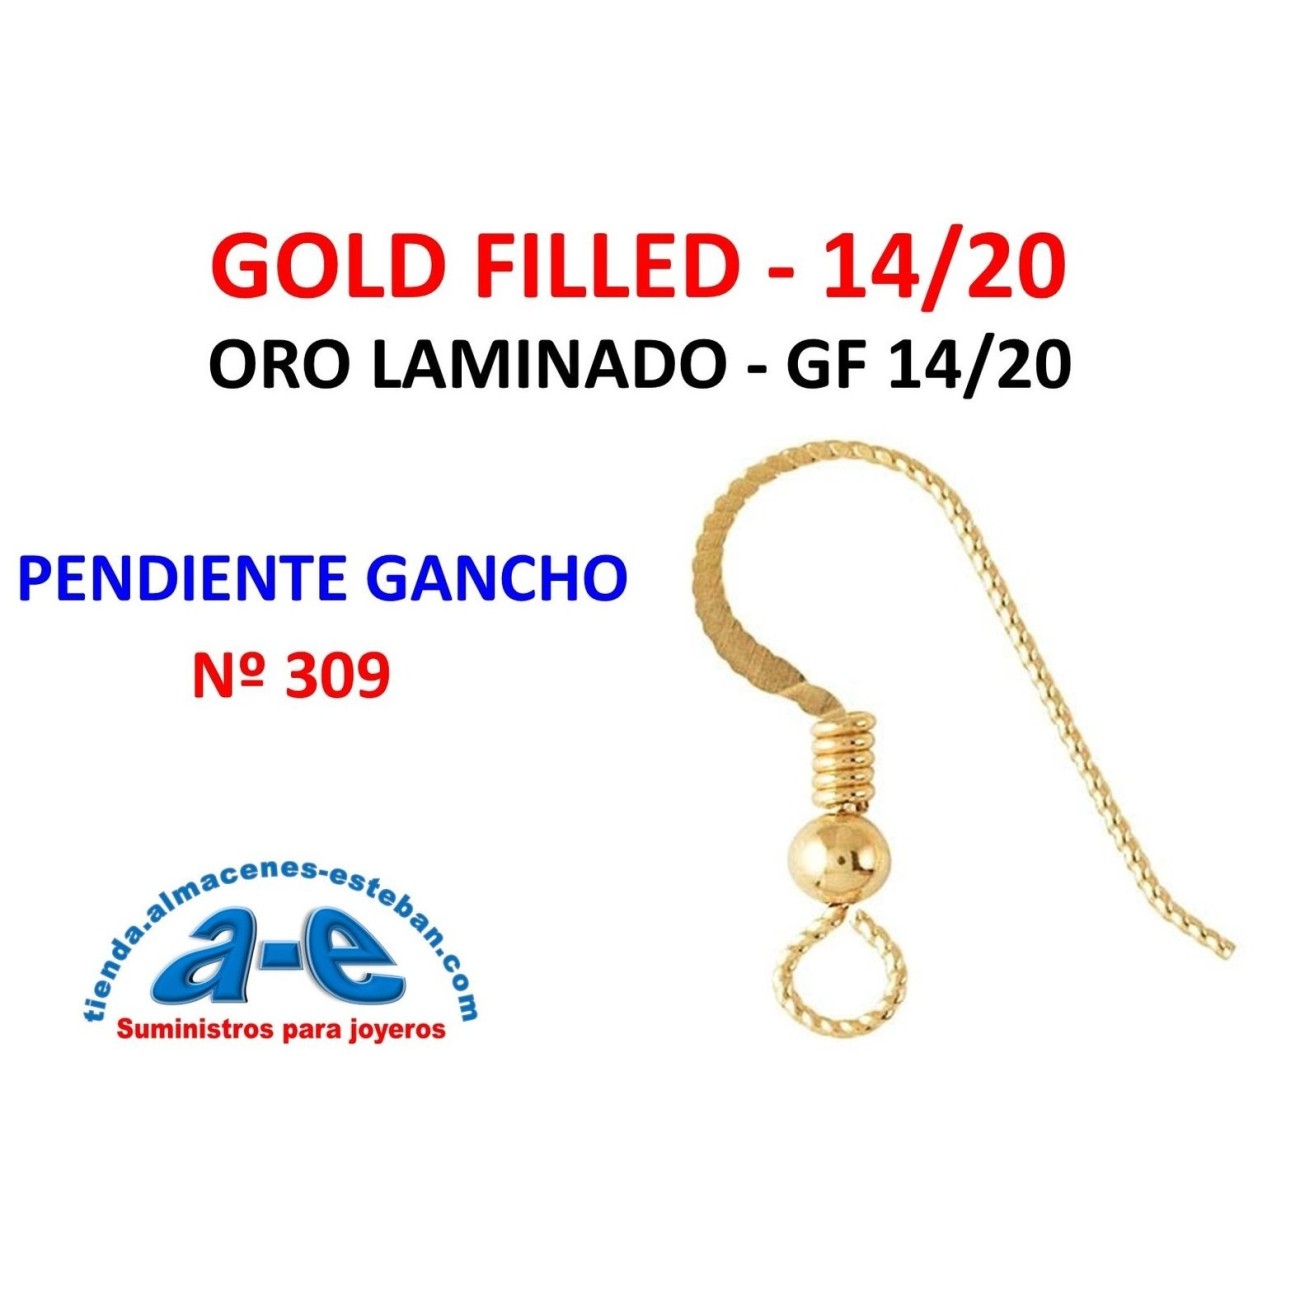 GOLD FILLED PENDIENTE GANCHO 309